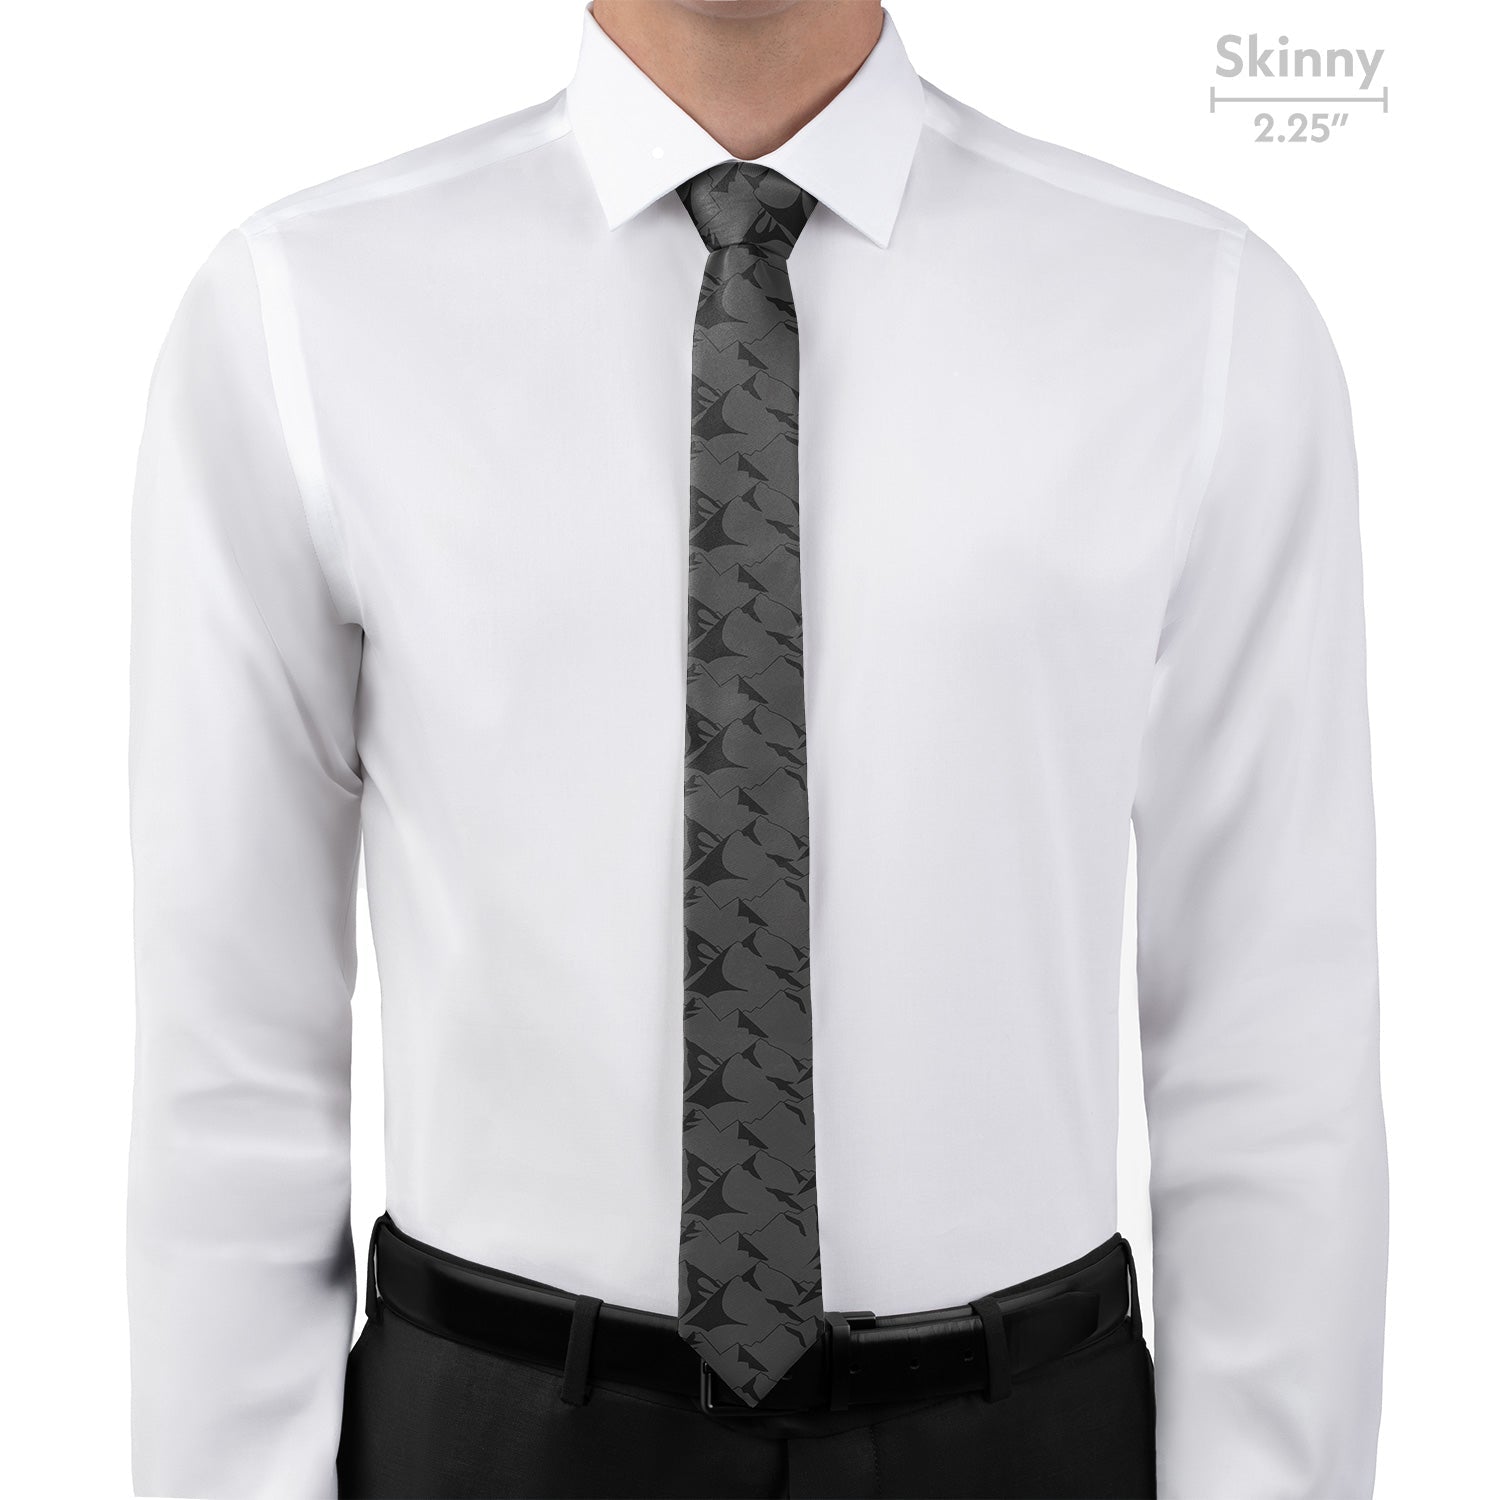 Mountains Necktie - Skinny 2.25" -  - Knotty Tie Co.